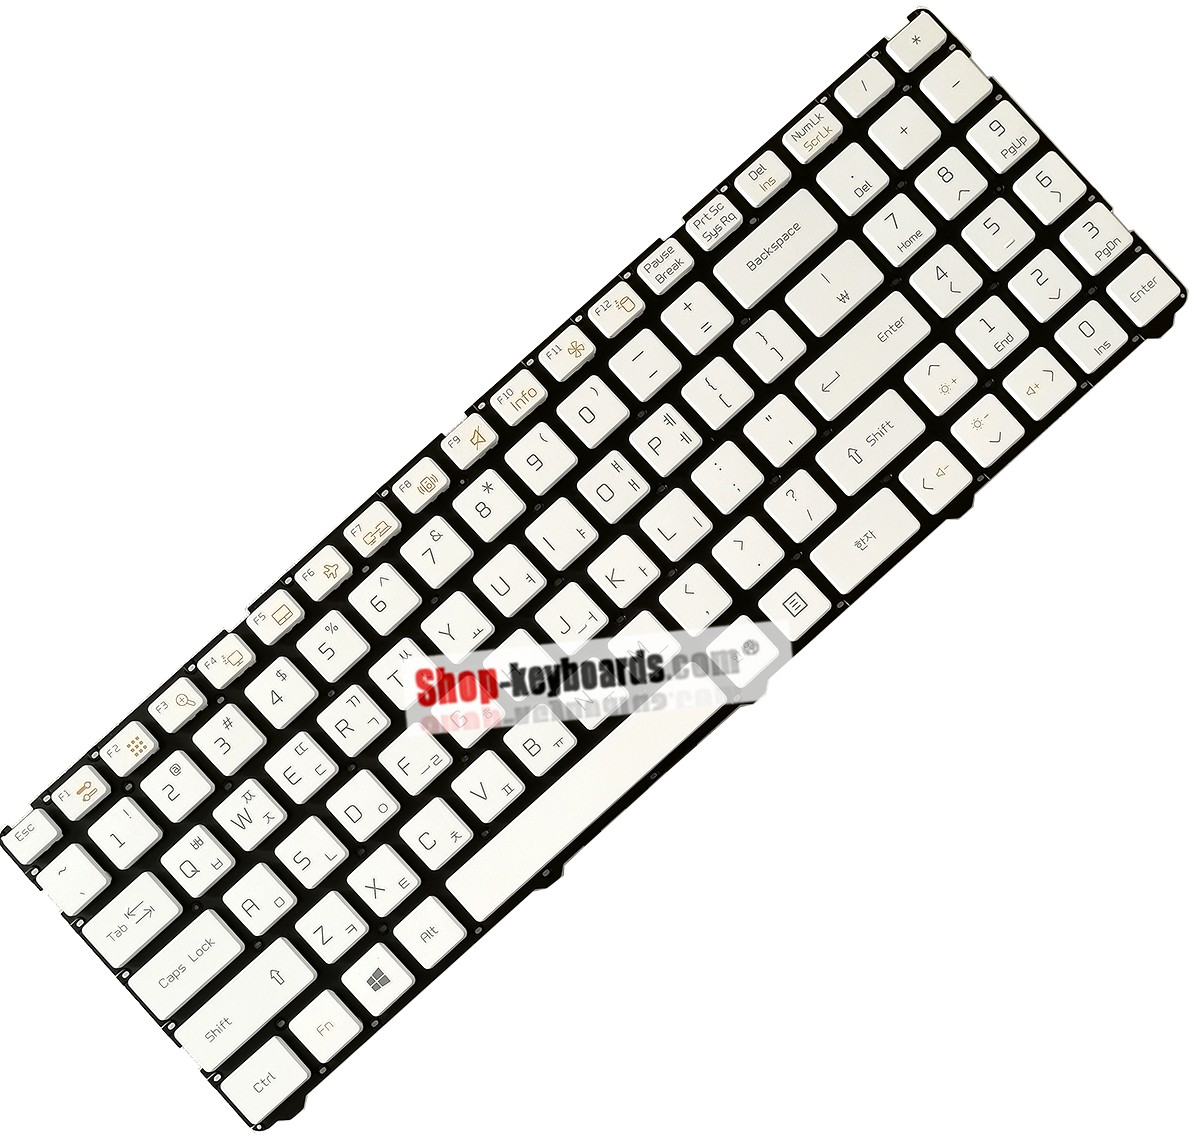 LG 15UD470-GX51K Keyboard replacement